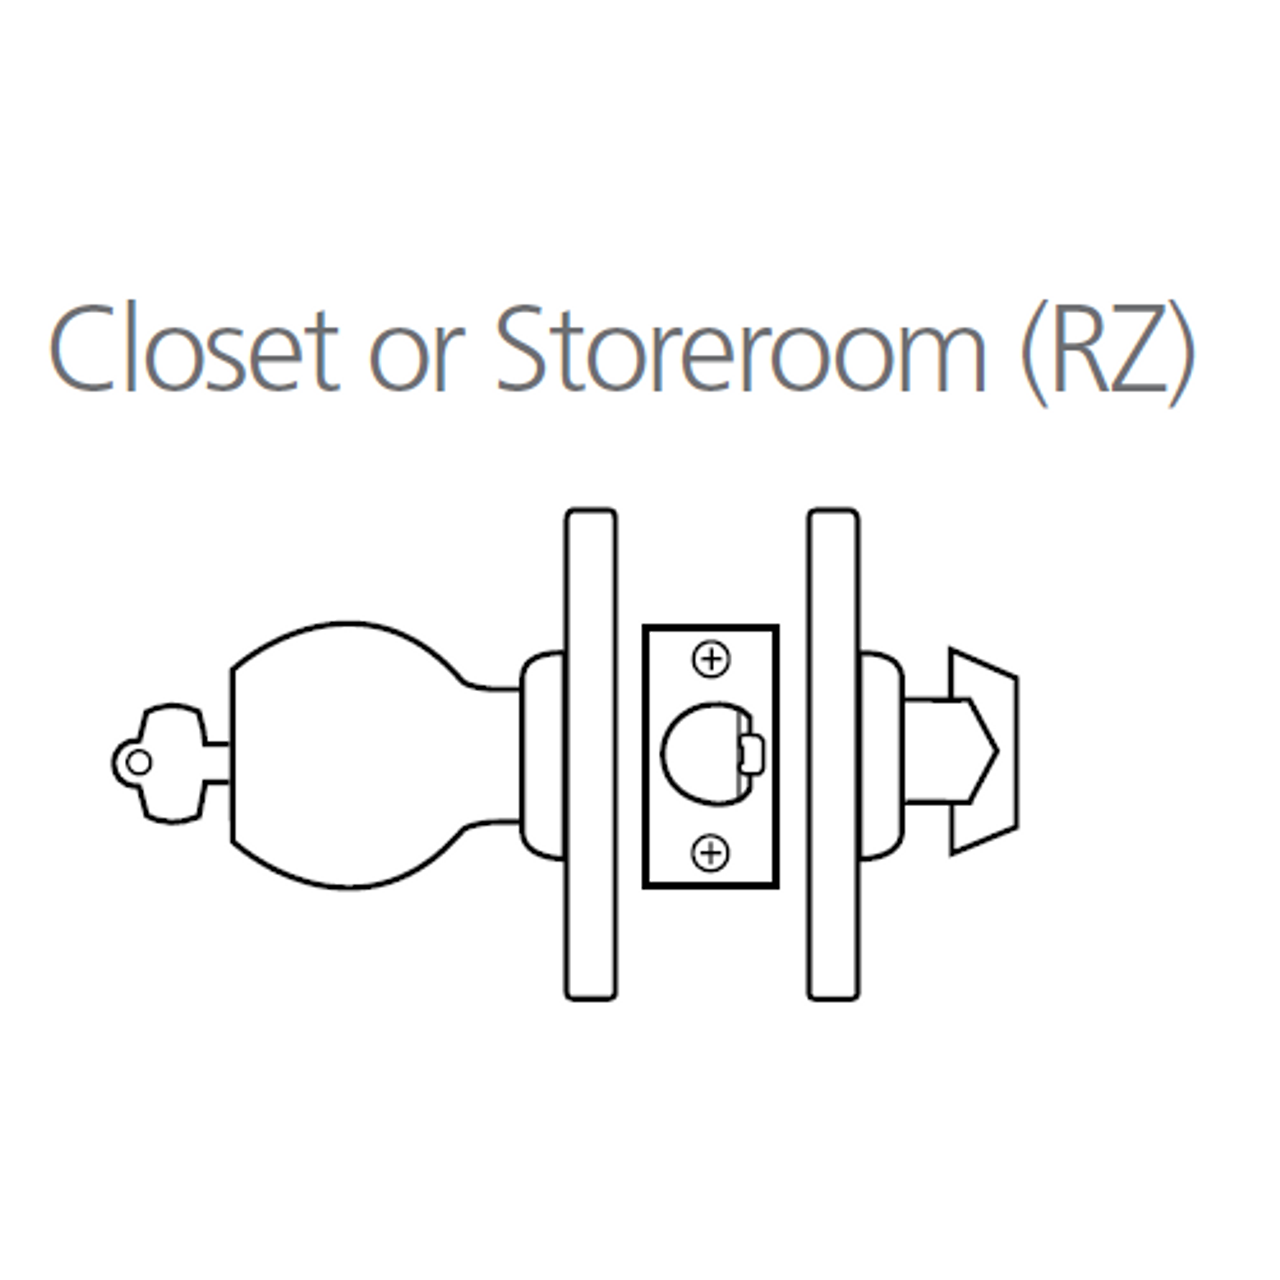 8K37RZ4CS3626 Best 8K Series Closet or Storeroom Heavy Duty Cylindrical Knob Locks with Round Style in Satin Chrome